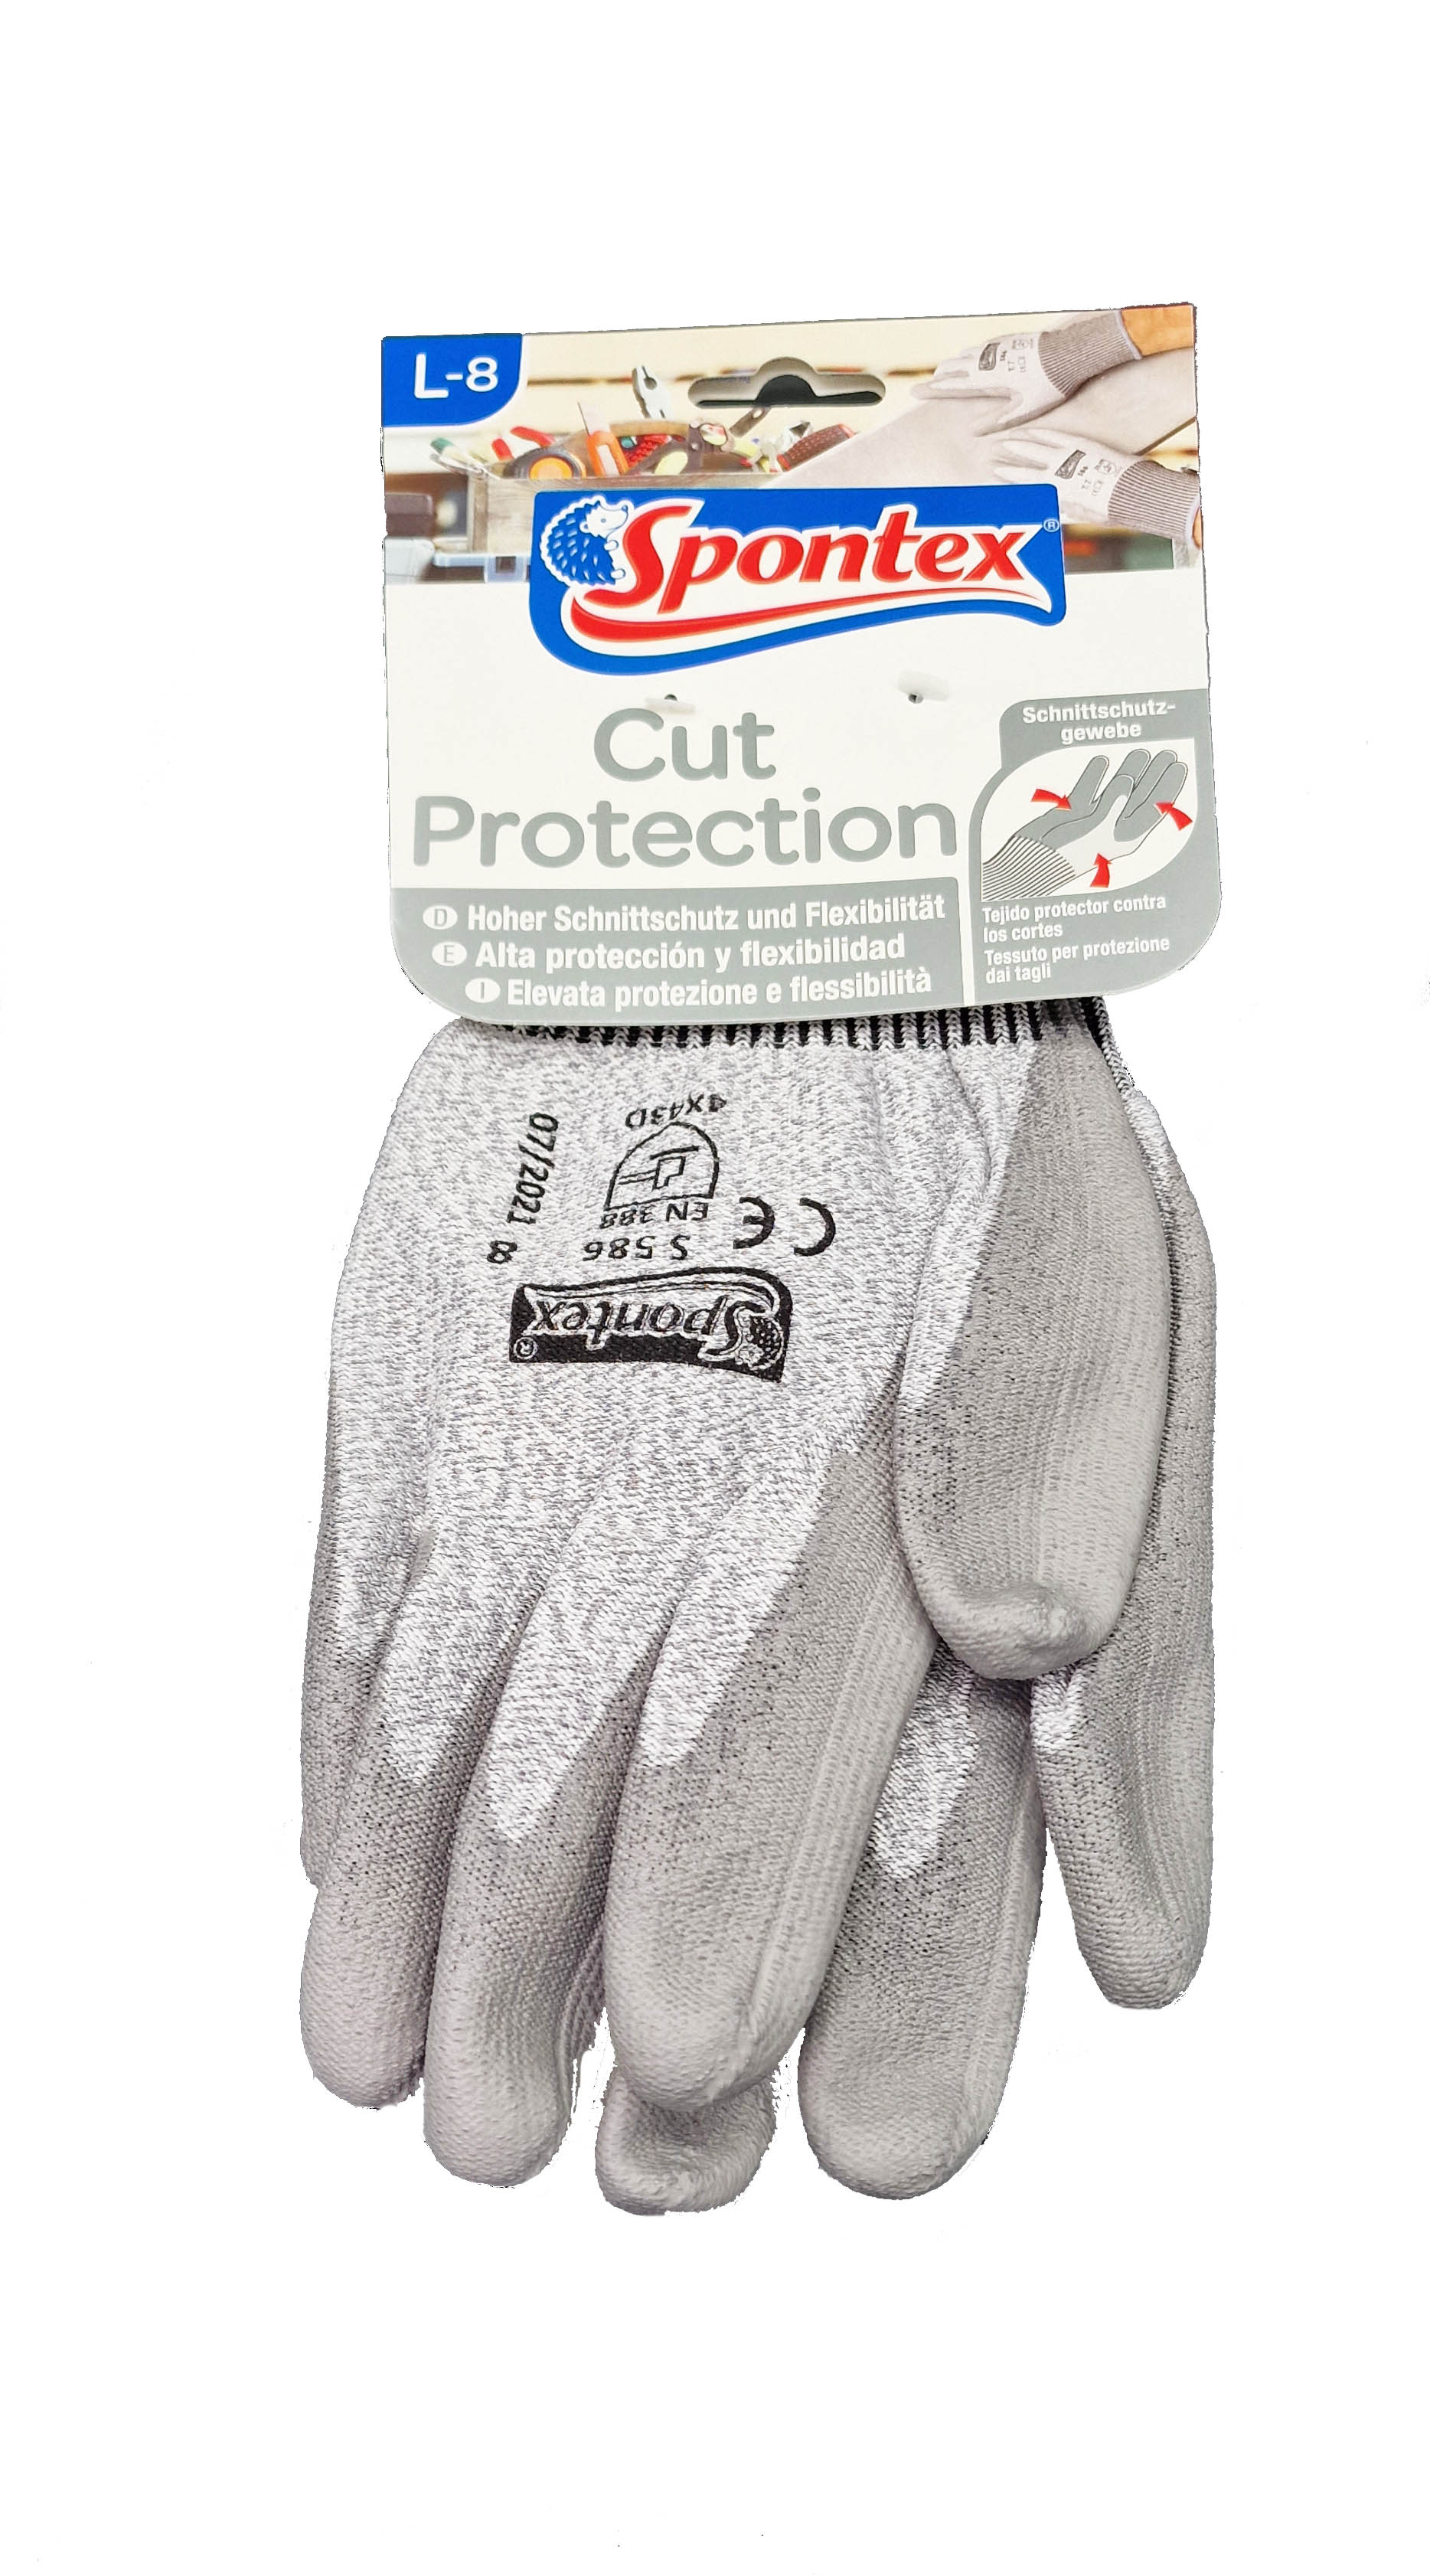 Spontex Schutzhandschuh Cut Protection Gr. 8